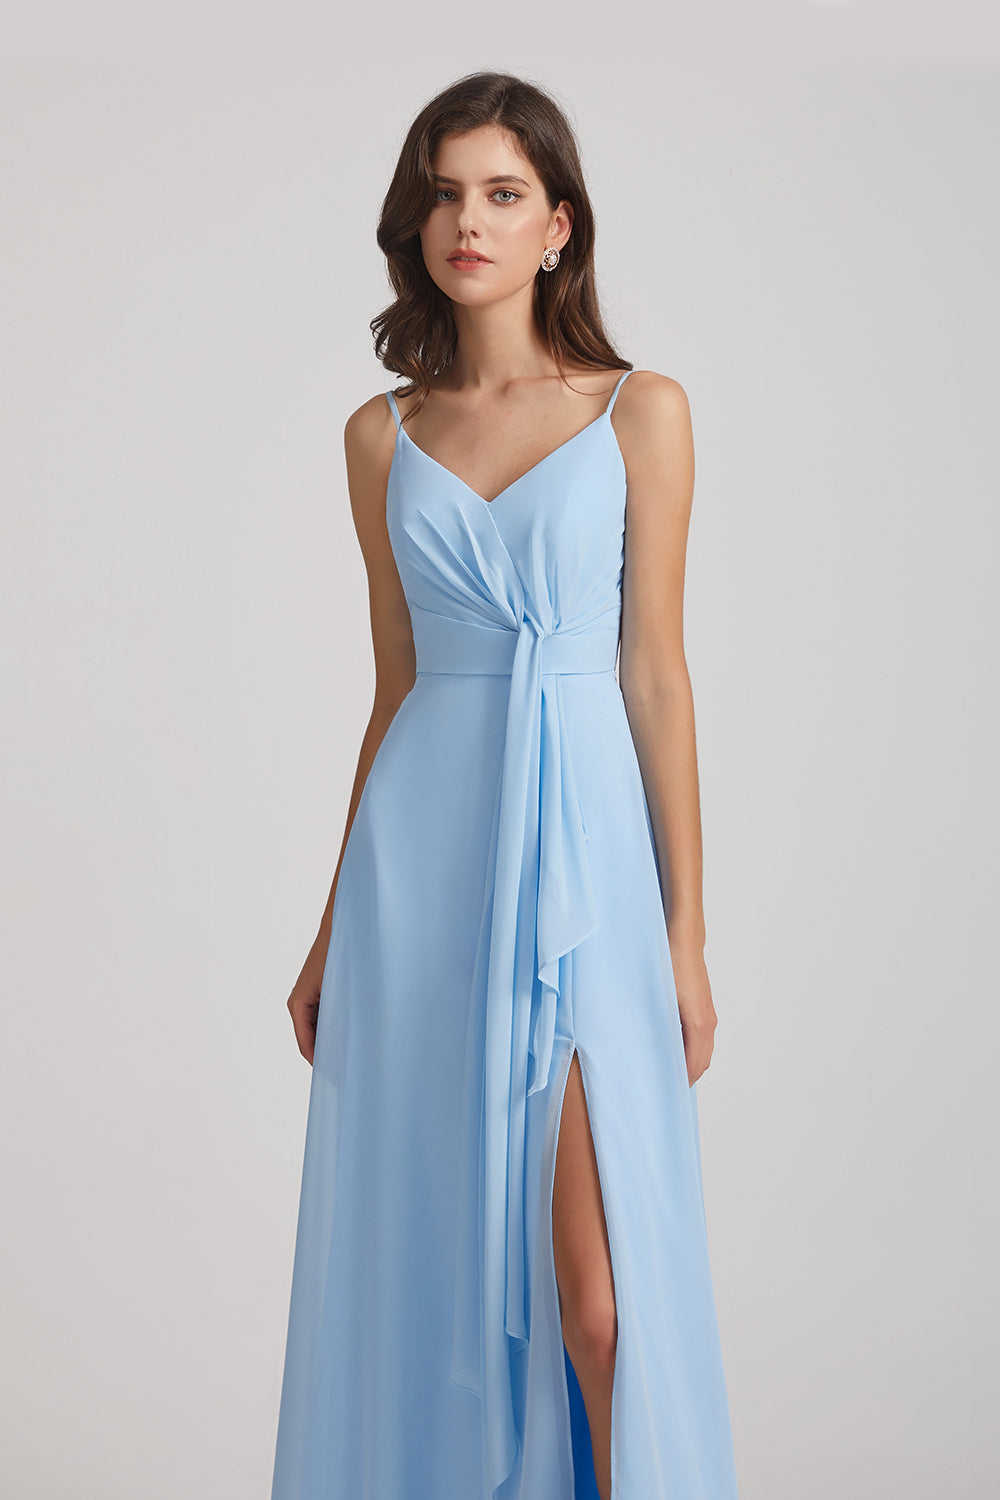 sky blue spaghetti strapes bridesmaid gown